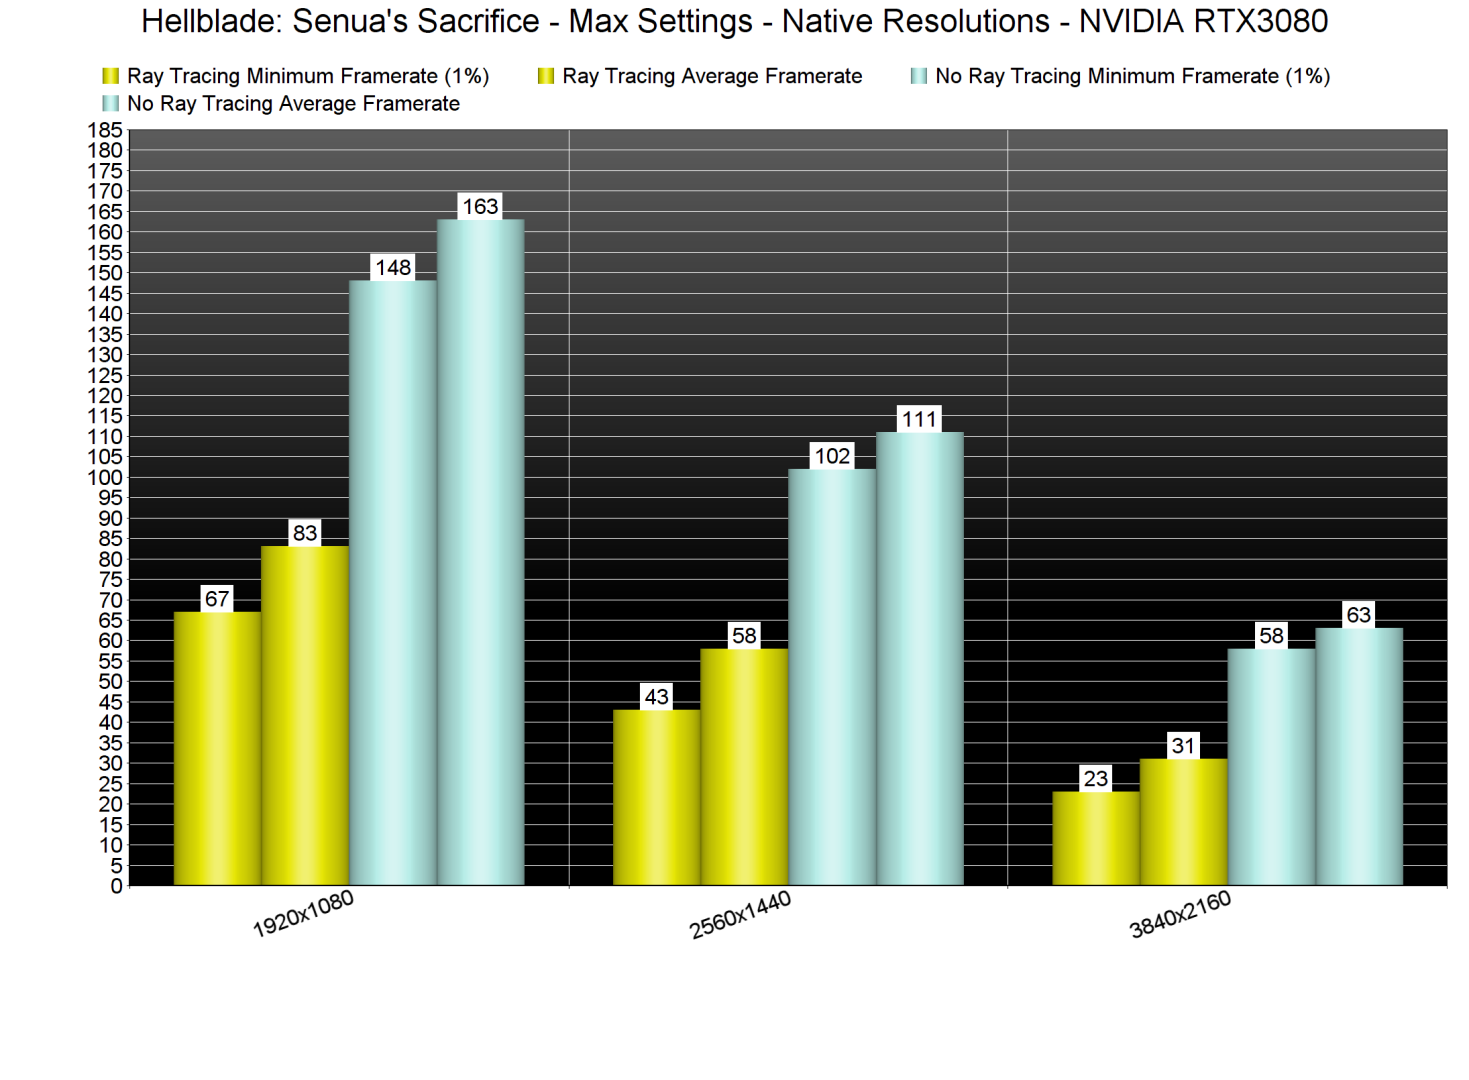 Hellblade Senua's Sacrifice Ray Tracing benchmarks